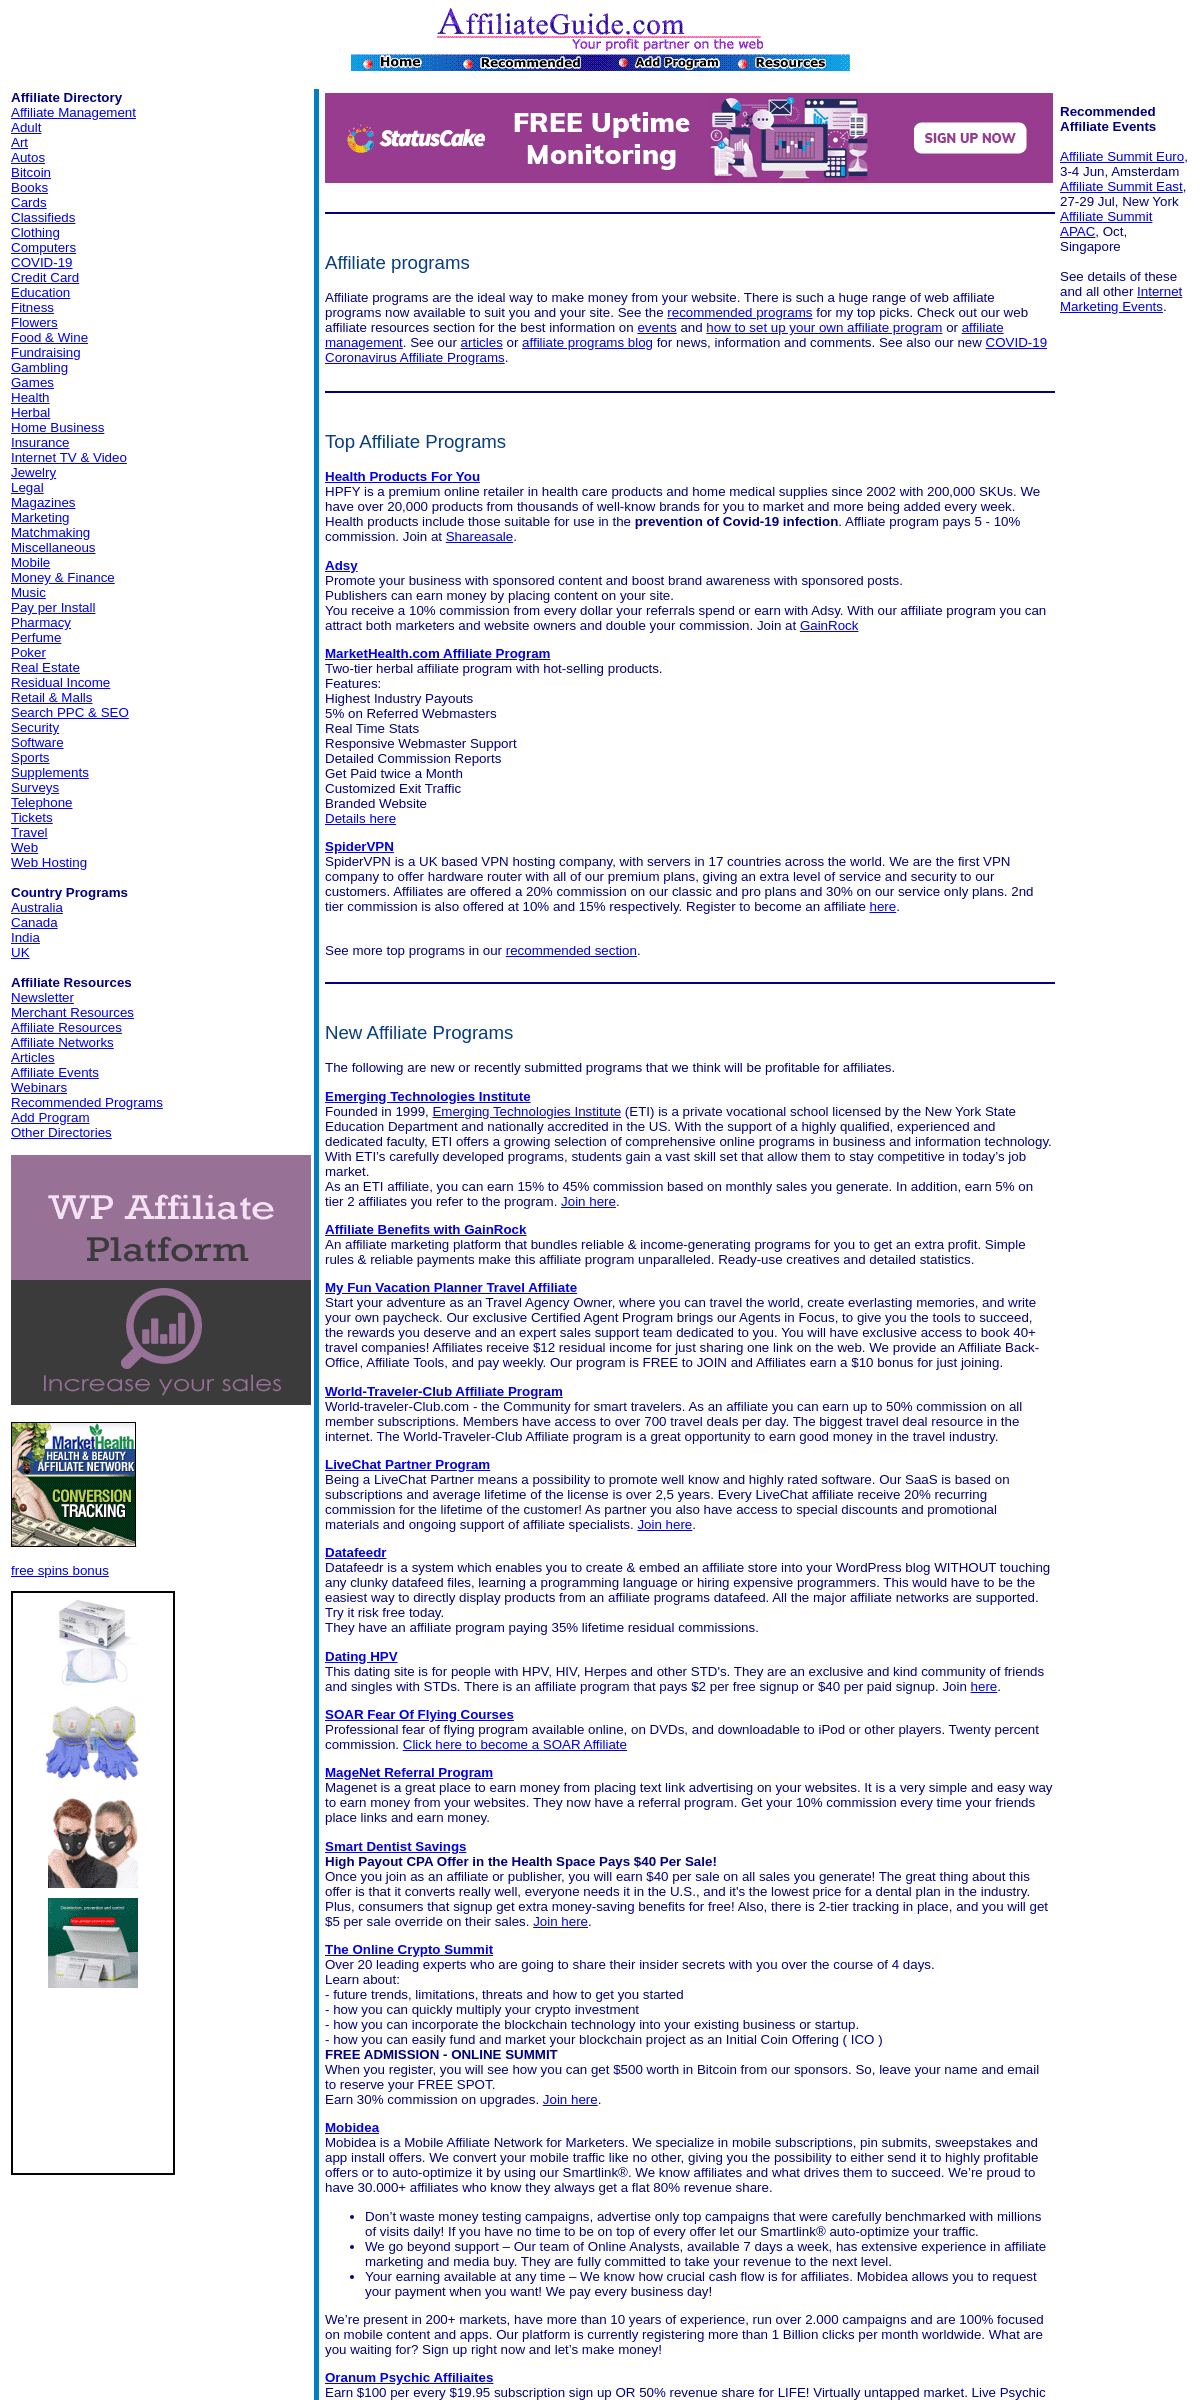 A complete backup of affiliateguide.com